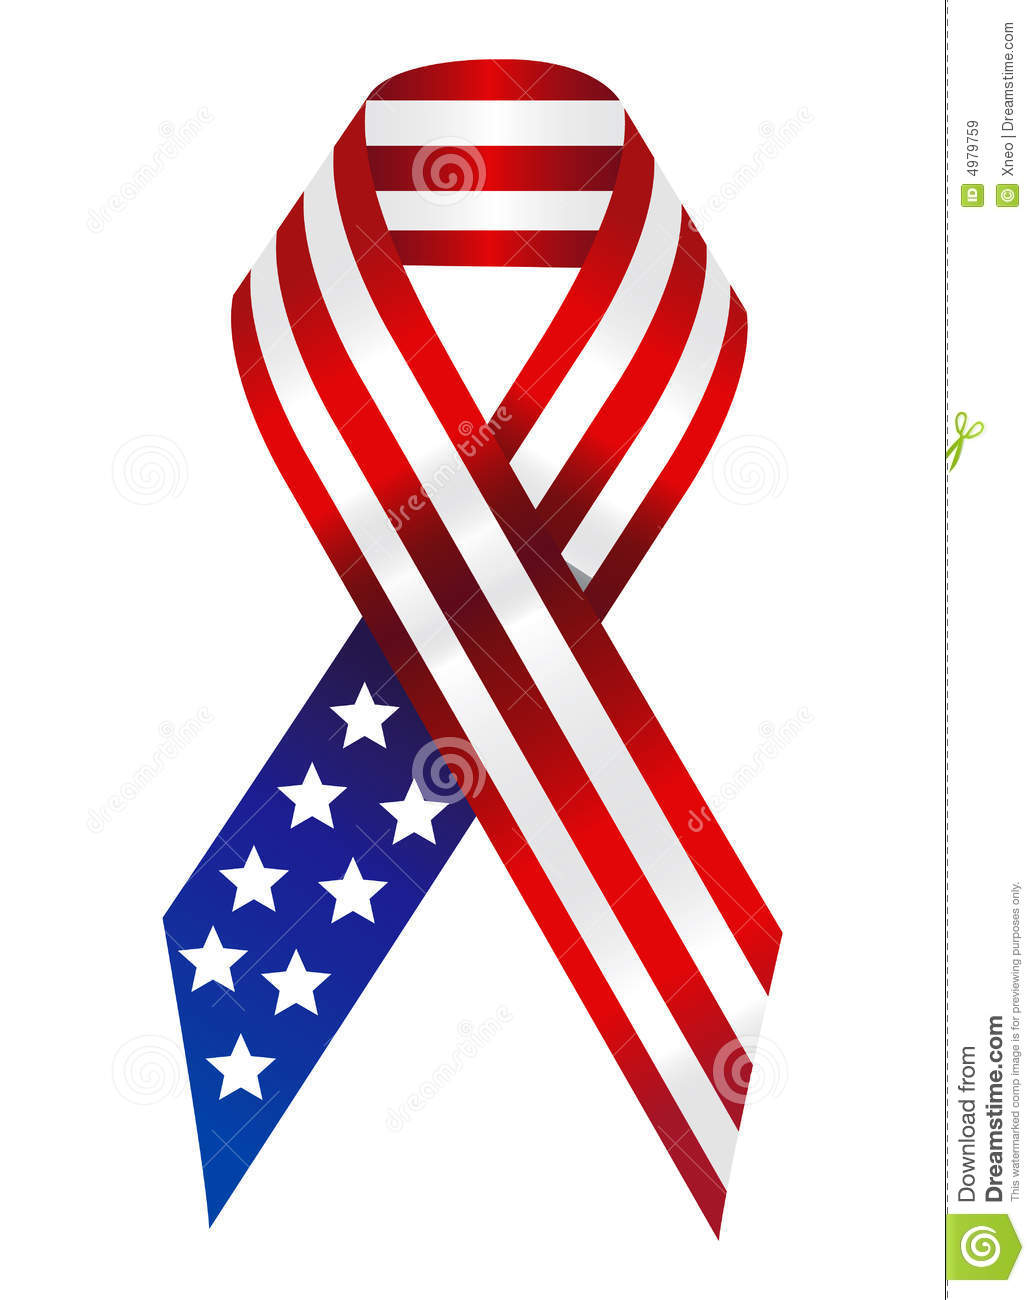 American Ribbon Royalty Free Stock Images   Image  4979759